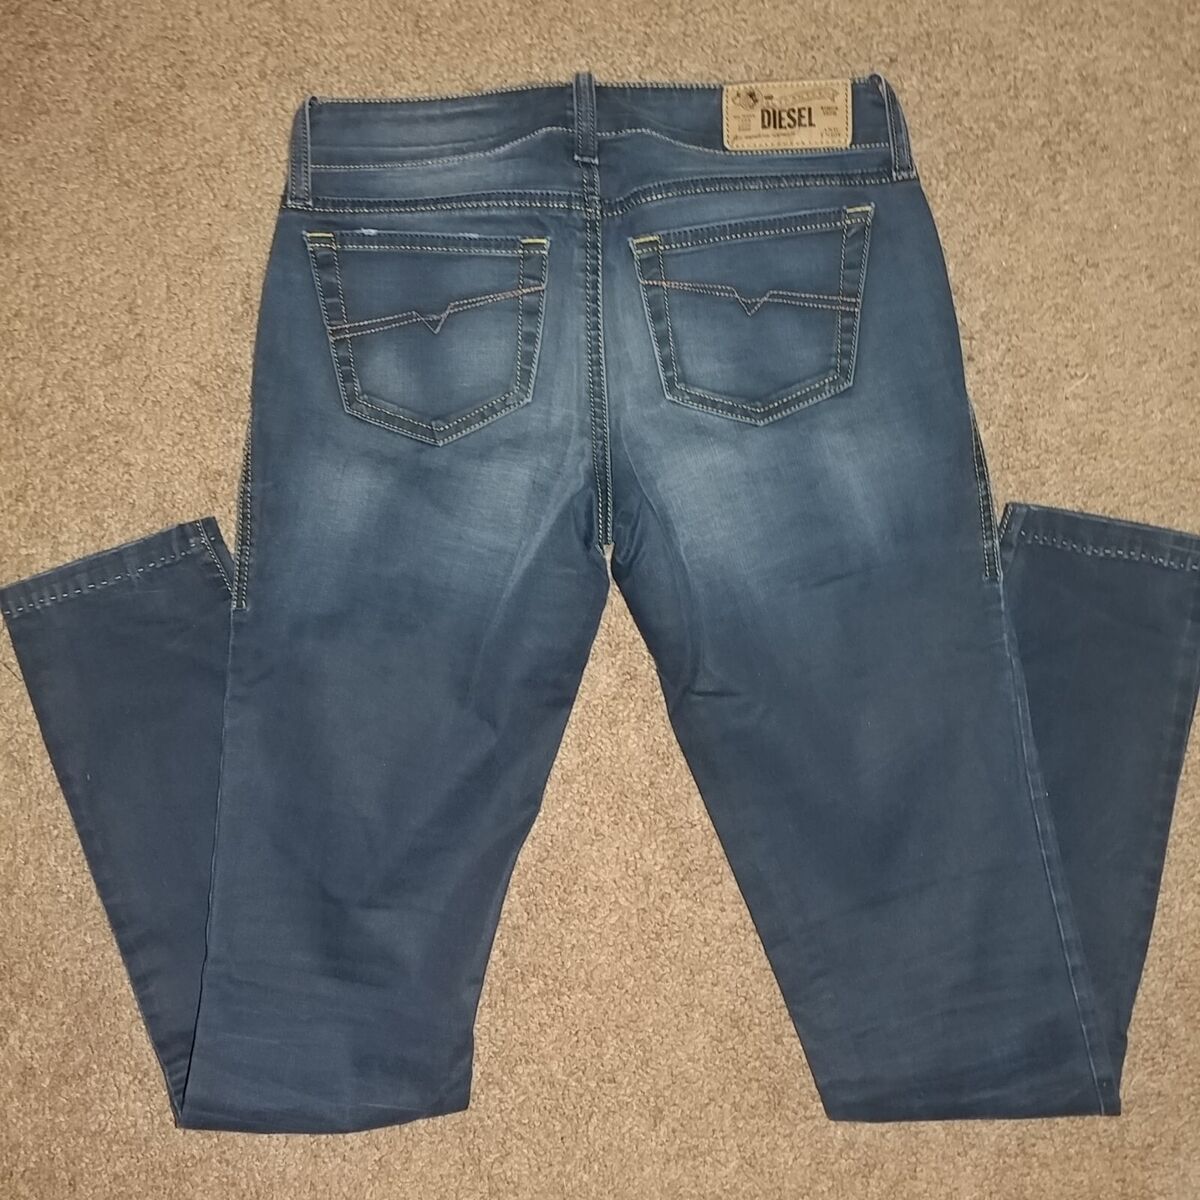 DIESEL: Grupee Super-Slim Skinny Low Waist Stretch Jeans - Women's Size 25